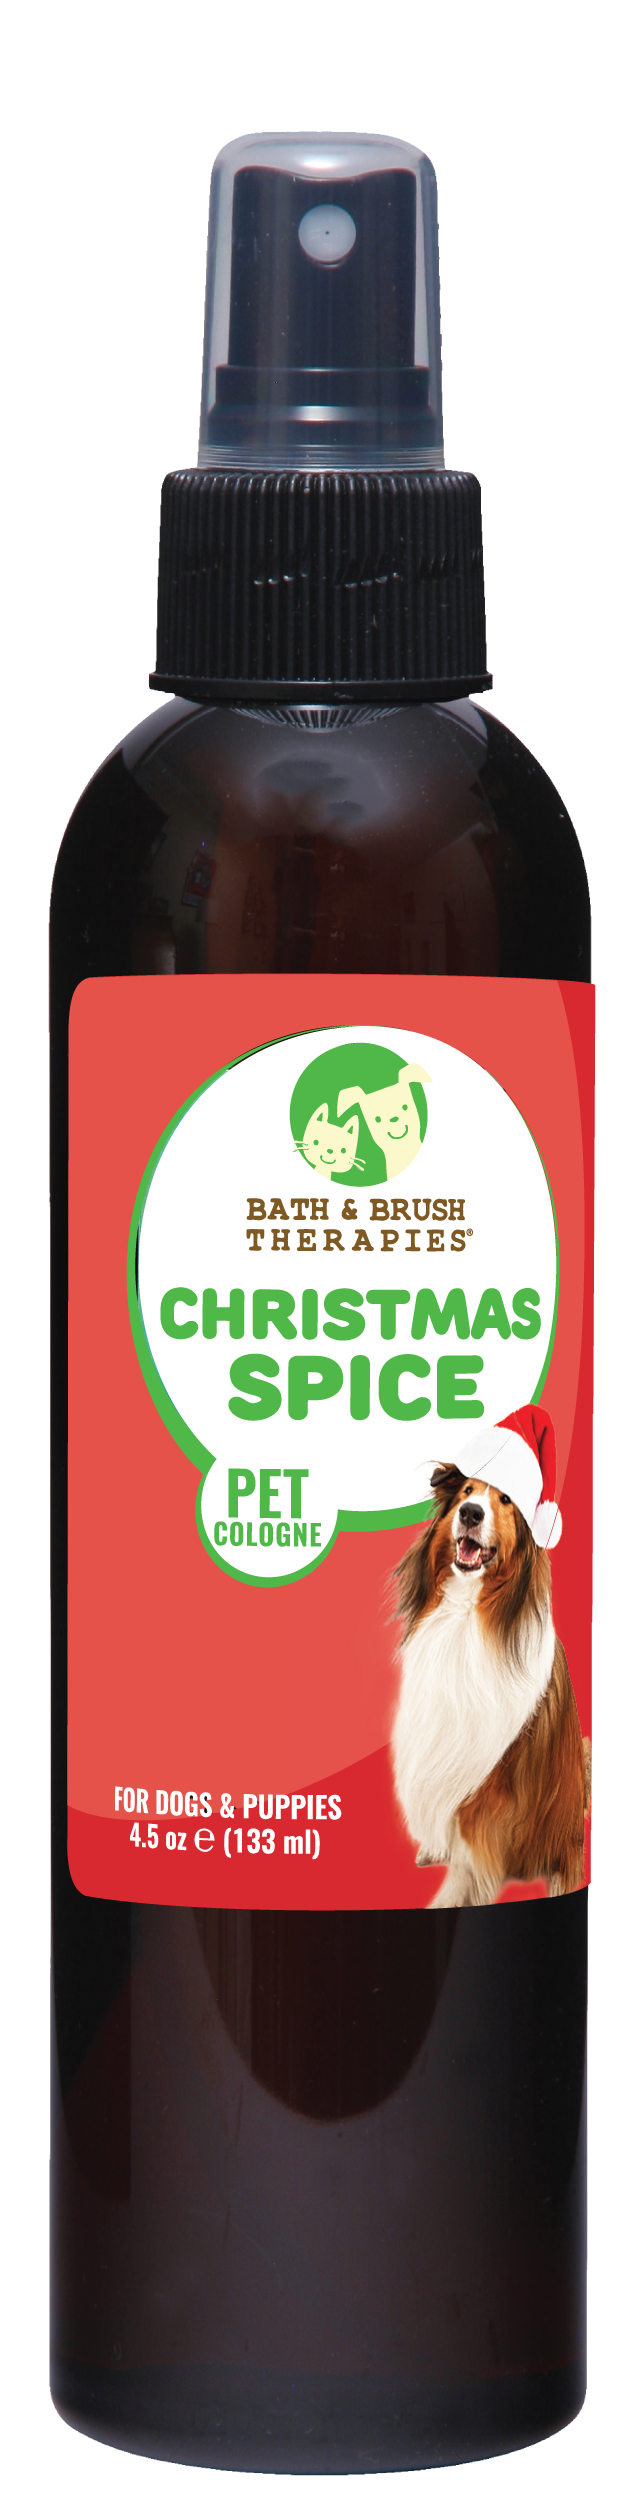 Christmas Spice Pet Cologne